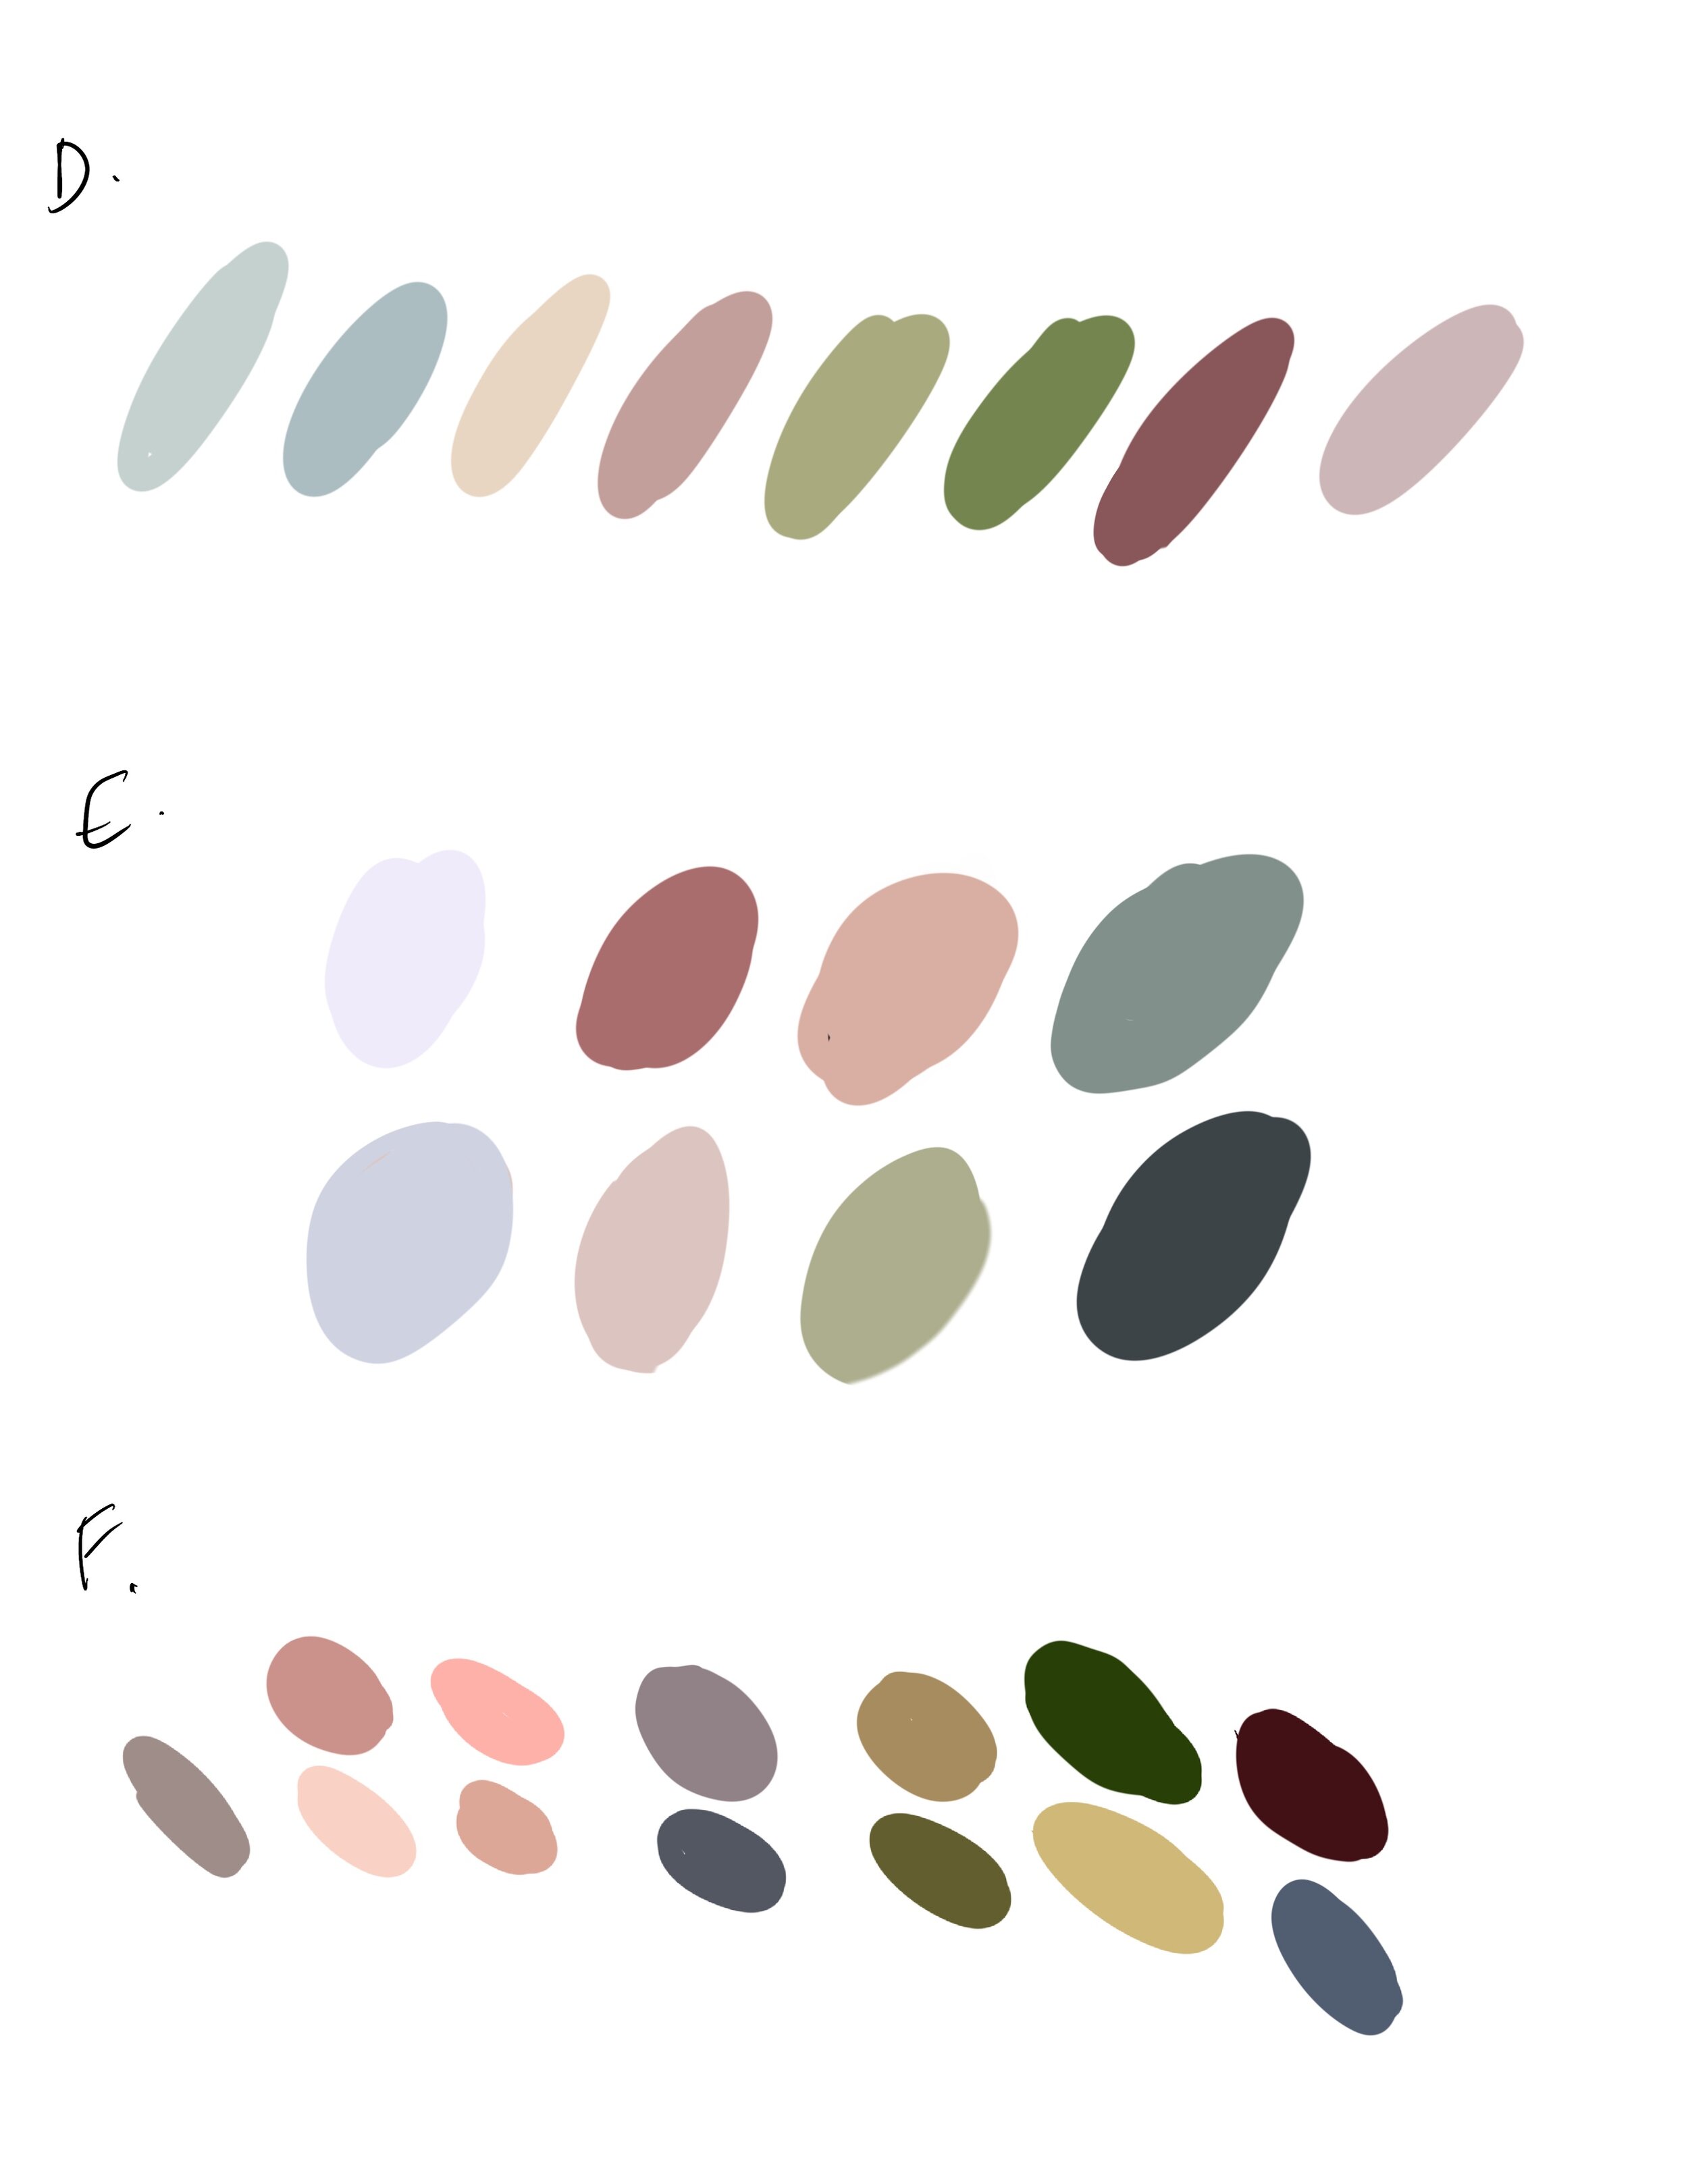 Kale Tree's Preliminary Color Palettes